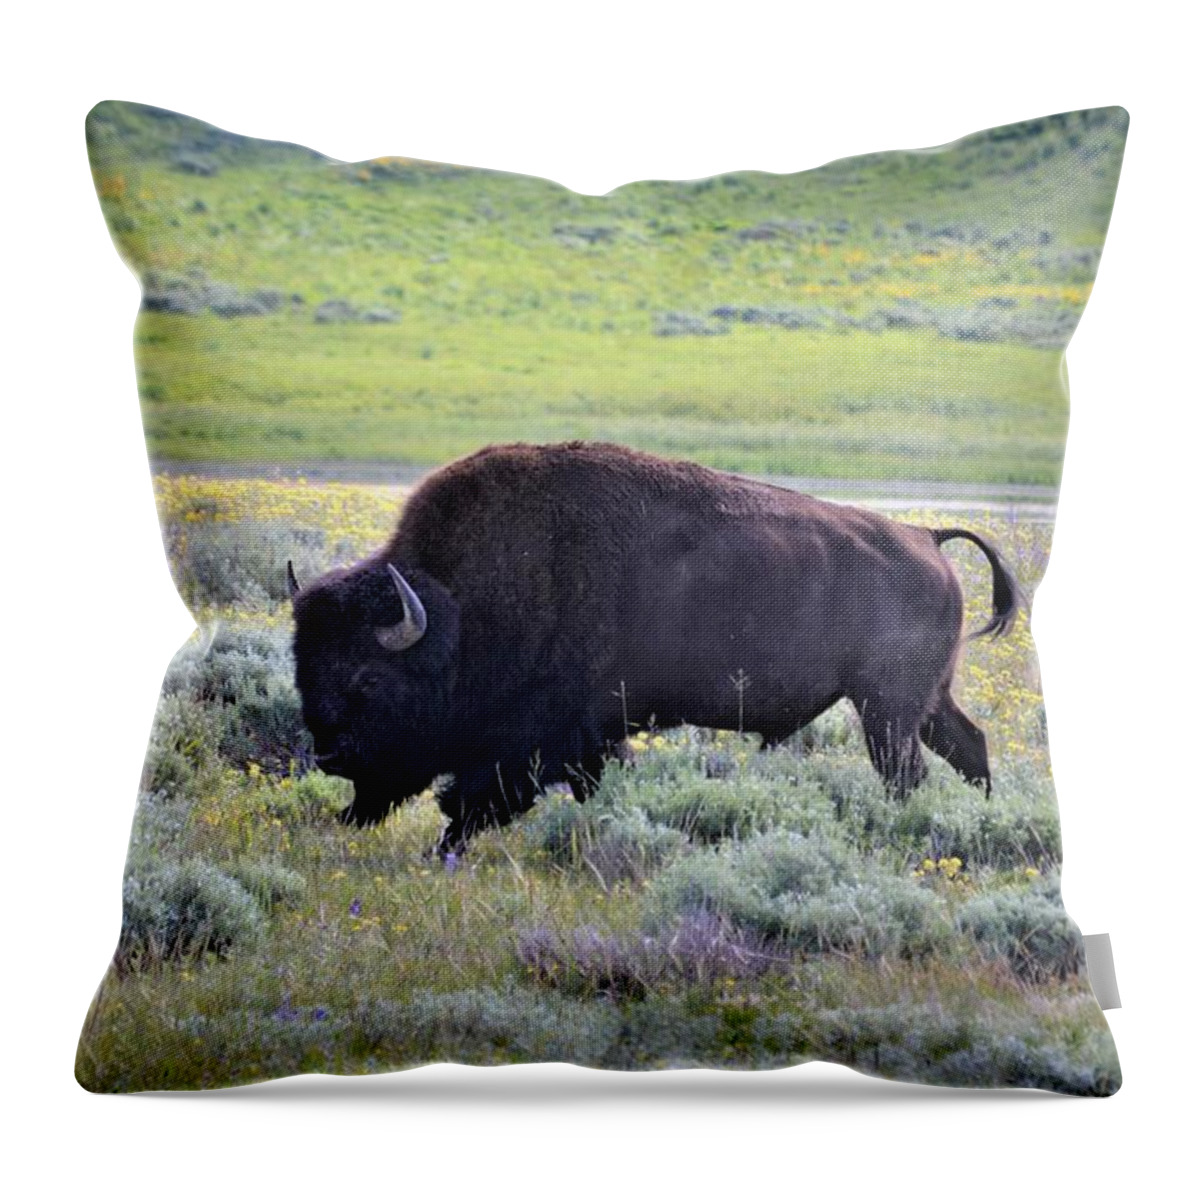 Western Art Throw Pillow featuring the photograph Buffalo in Spring by Alden White Ballard